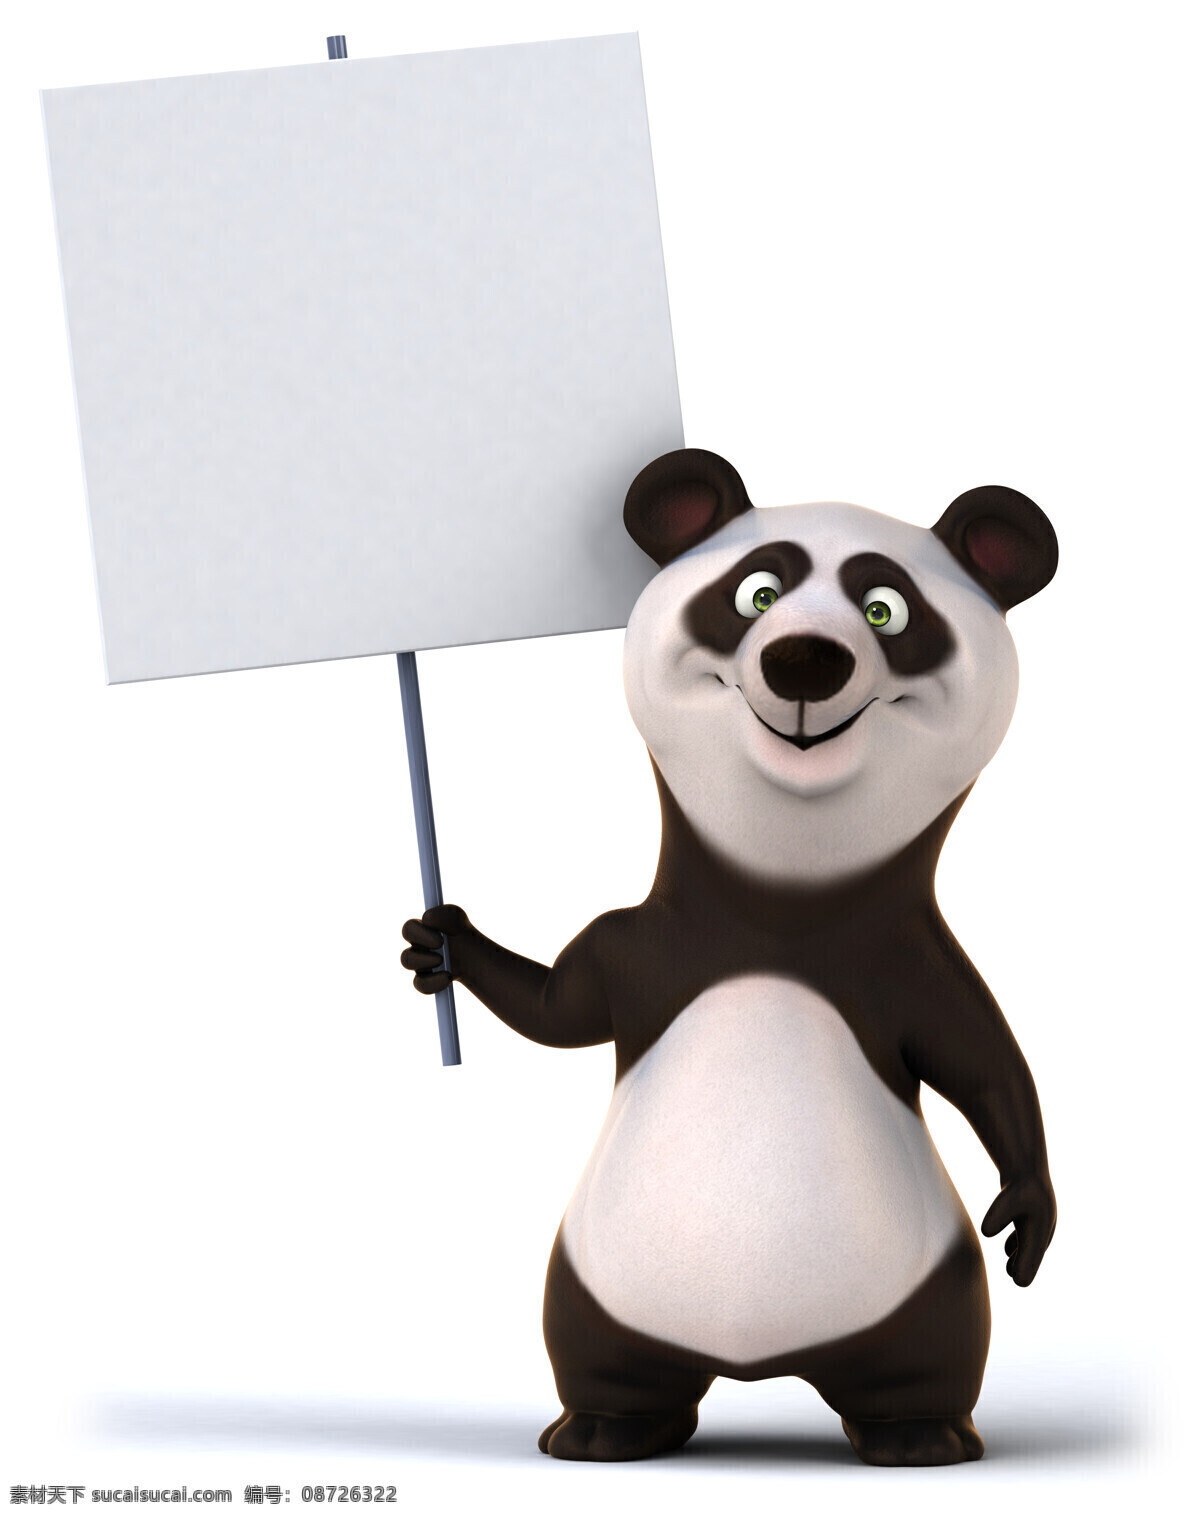 3d设计 大熊猫 空白广告牌 熊猫 野生动物 设计素材 模板下载 3d熊猫 国宝 四川大熊猫 四川熊猫基地 熊猫宝宝 矢量图